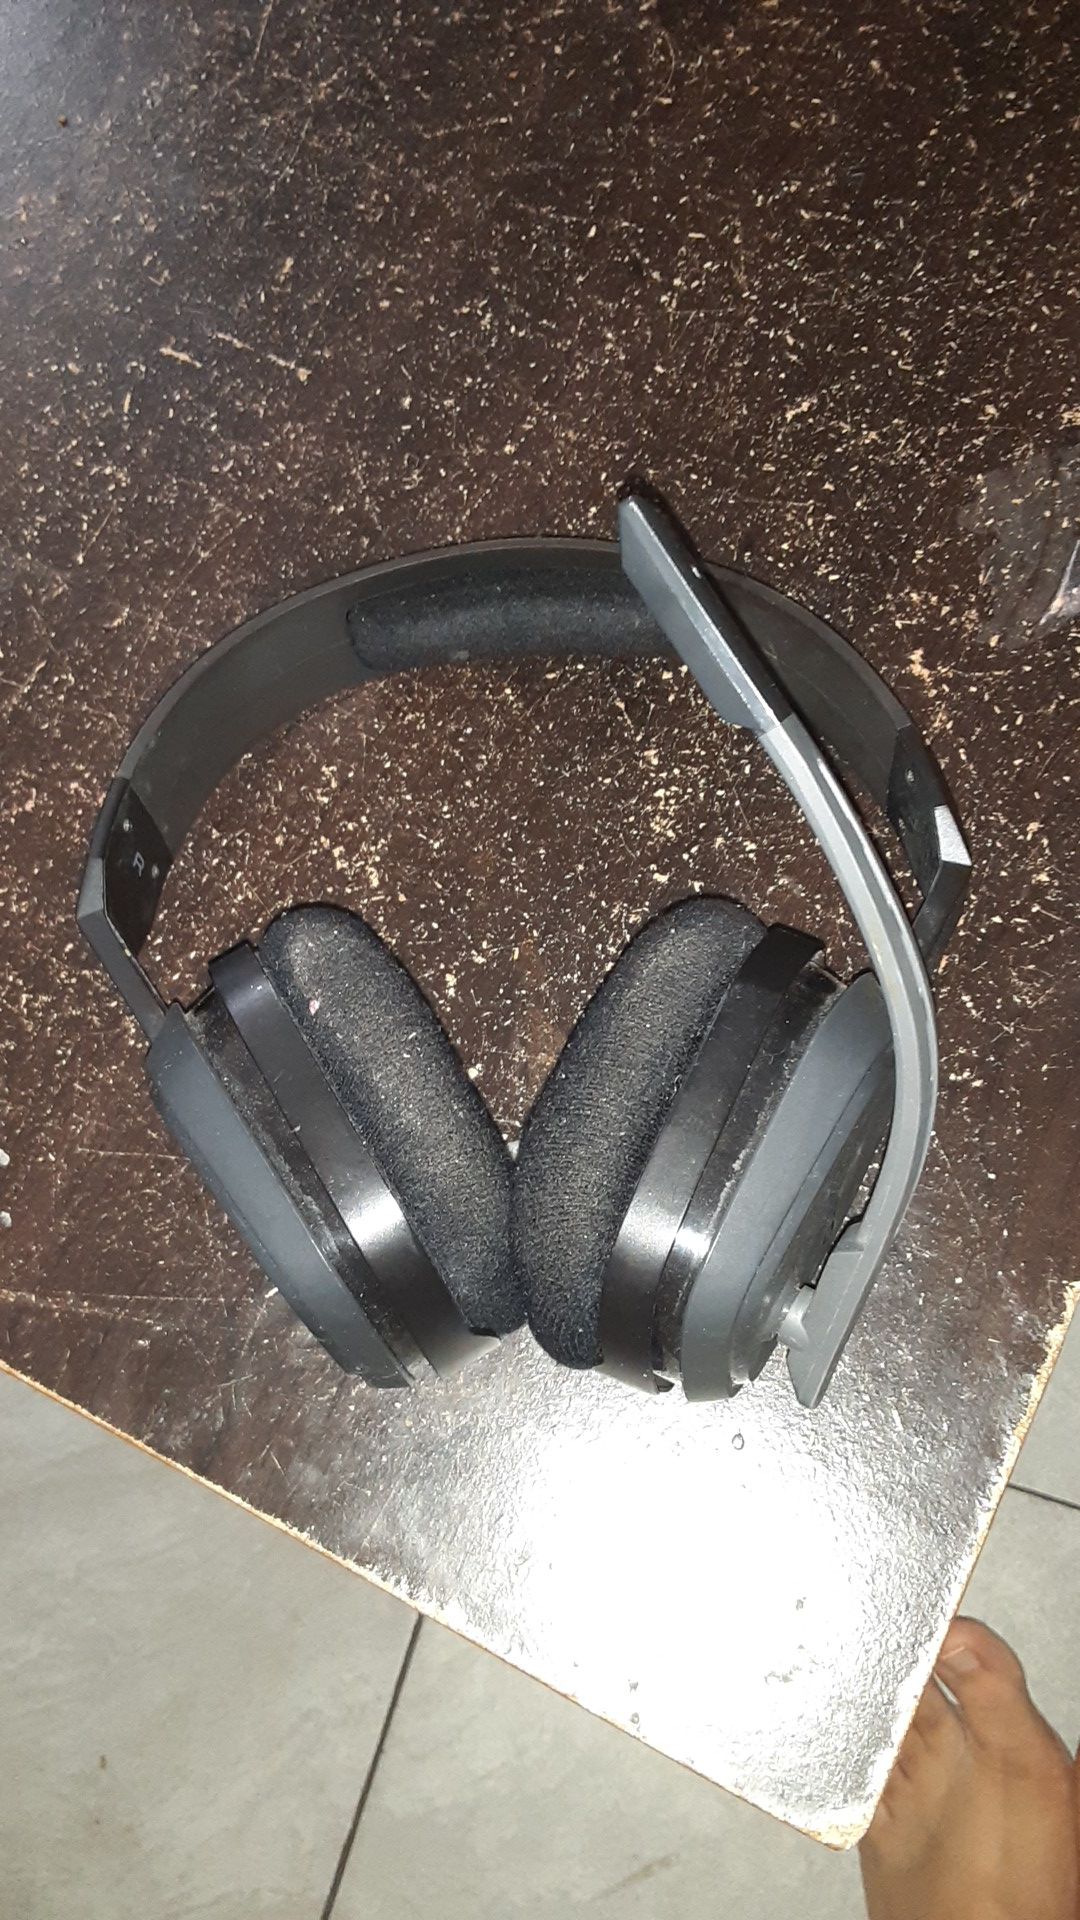 Astros a10 headphones